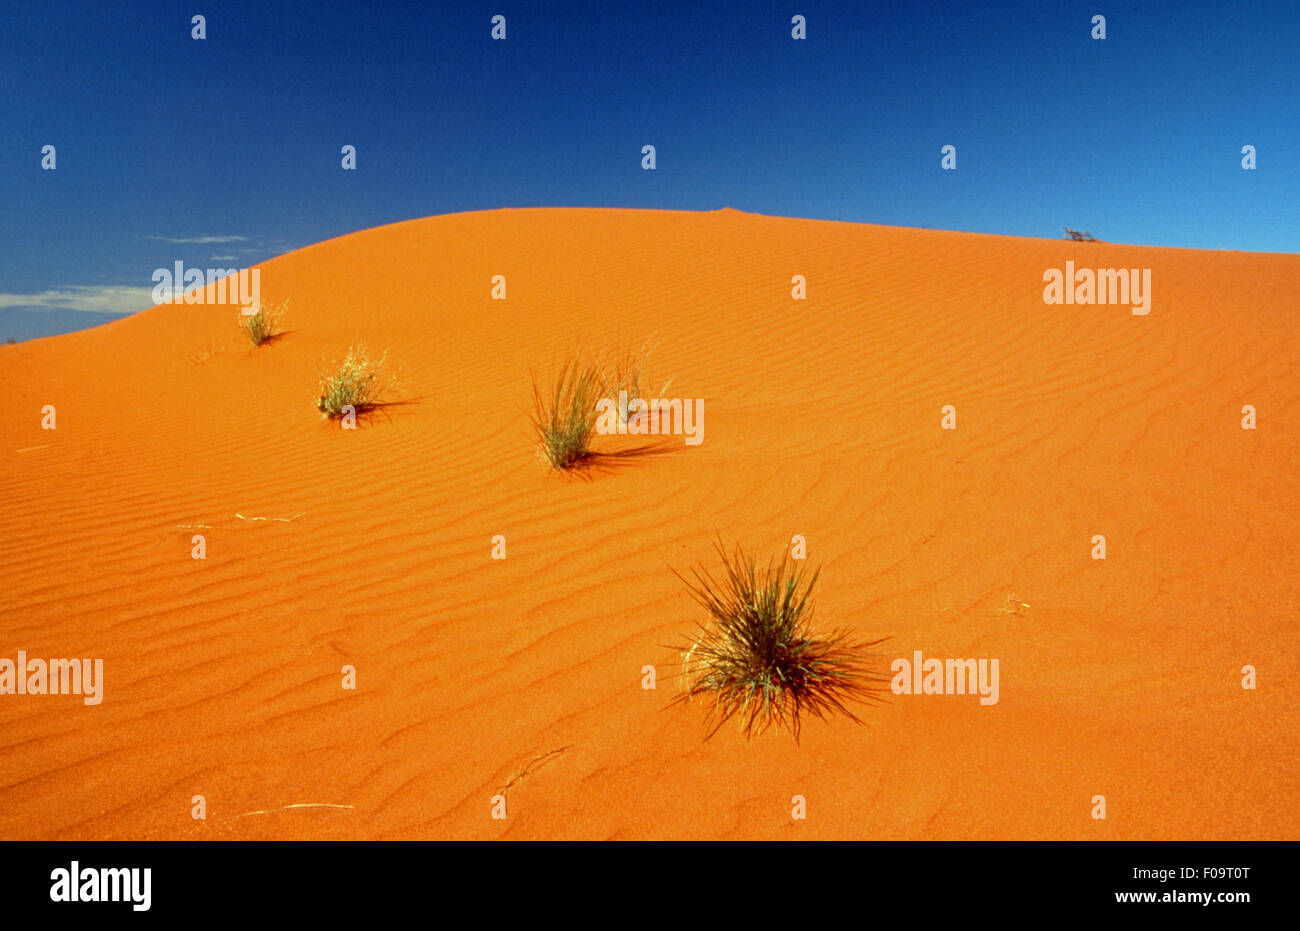 SAND DUNES AND VEGETATION IN THE GREAT VICTORIA DESERT, WESTERN AUSTRALIA Stock Photo